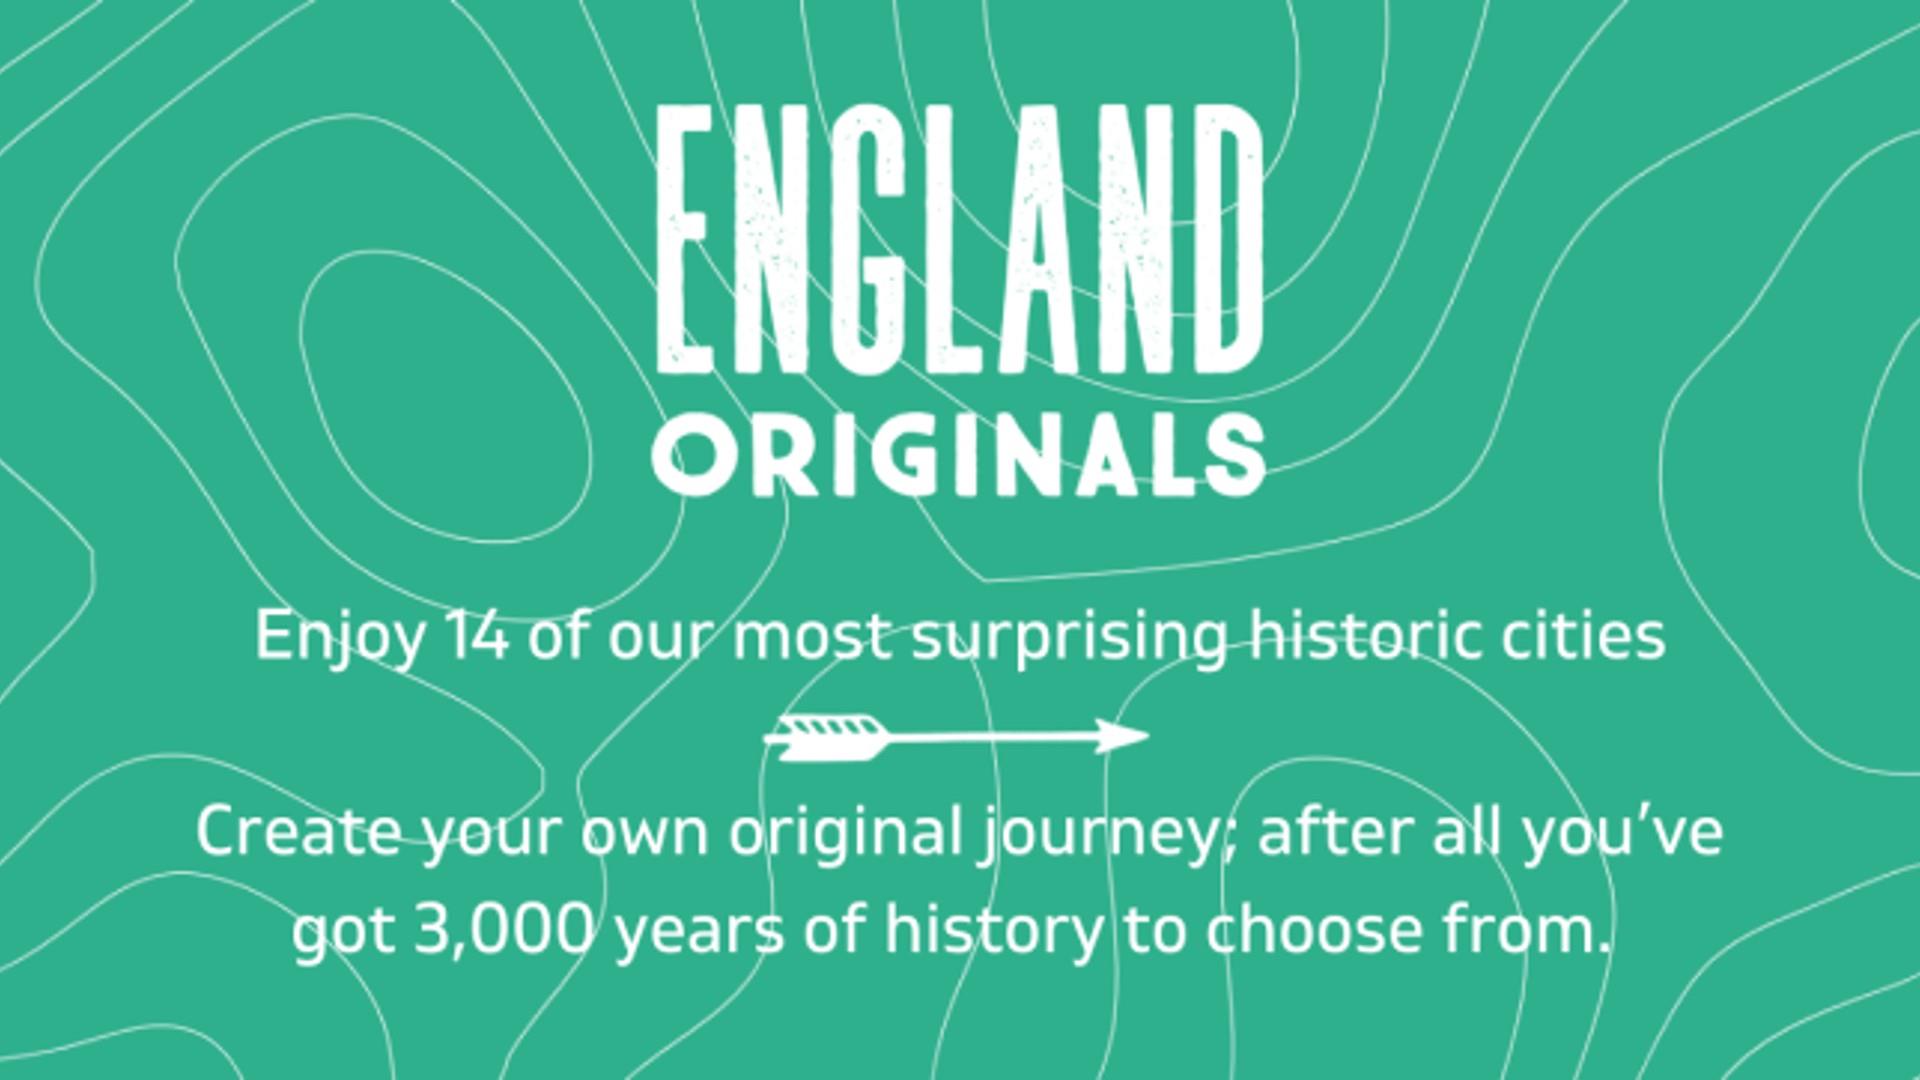 Information on England Originals